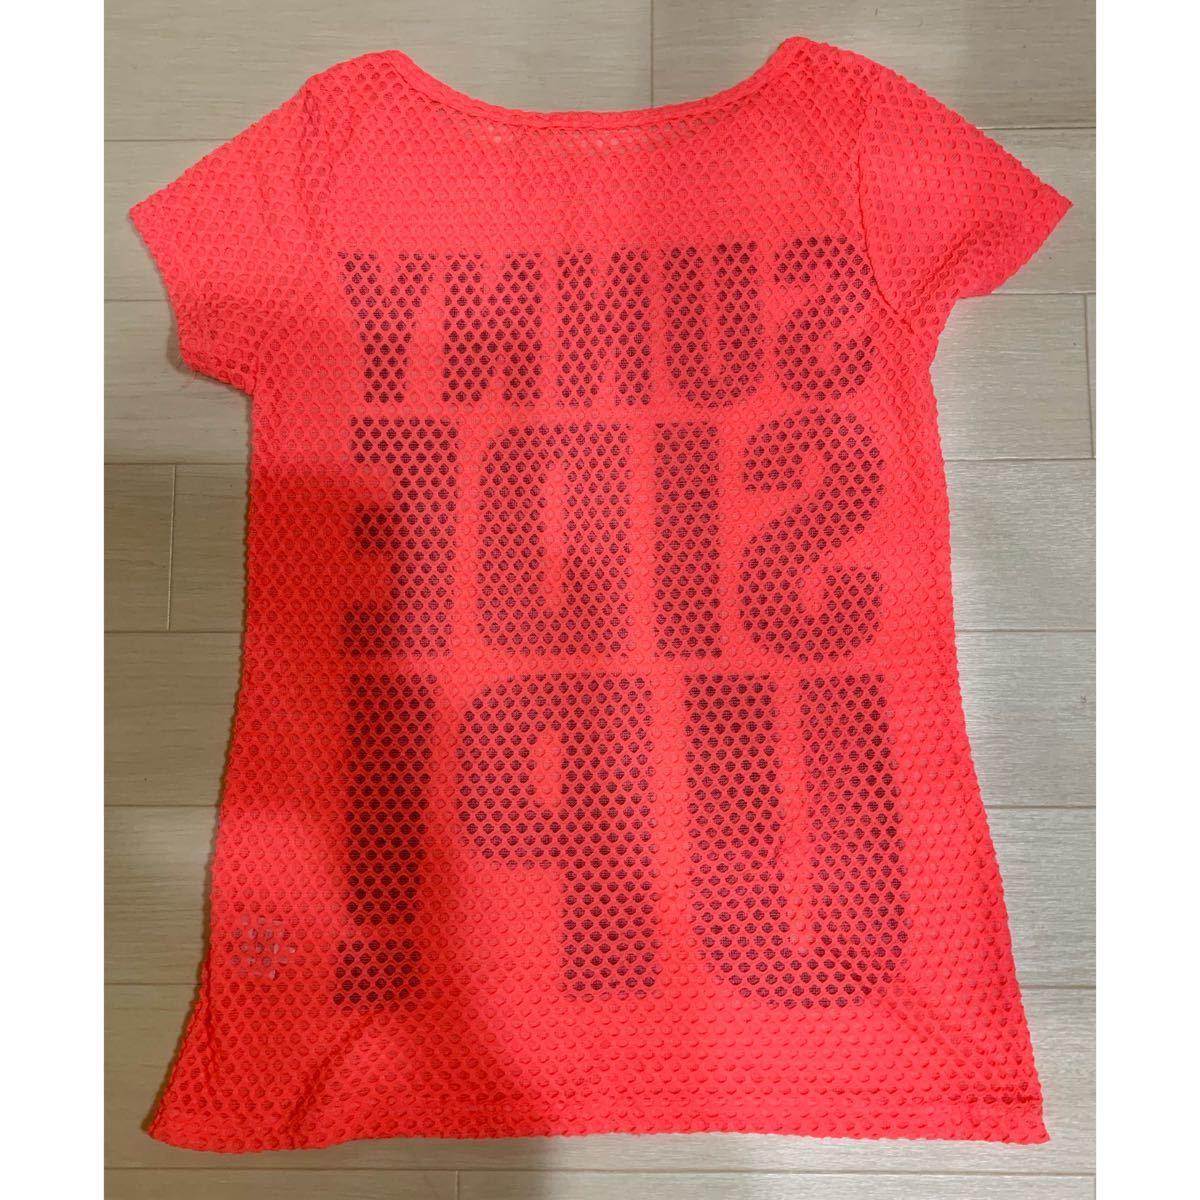 CO&LU COCOLULU ココルル トップス Tシャツ 蛍光色 カラー